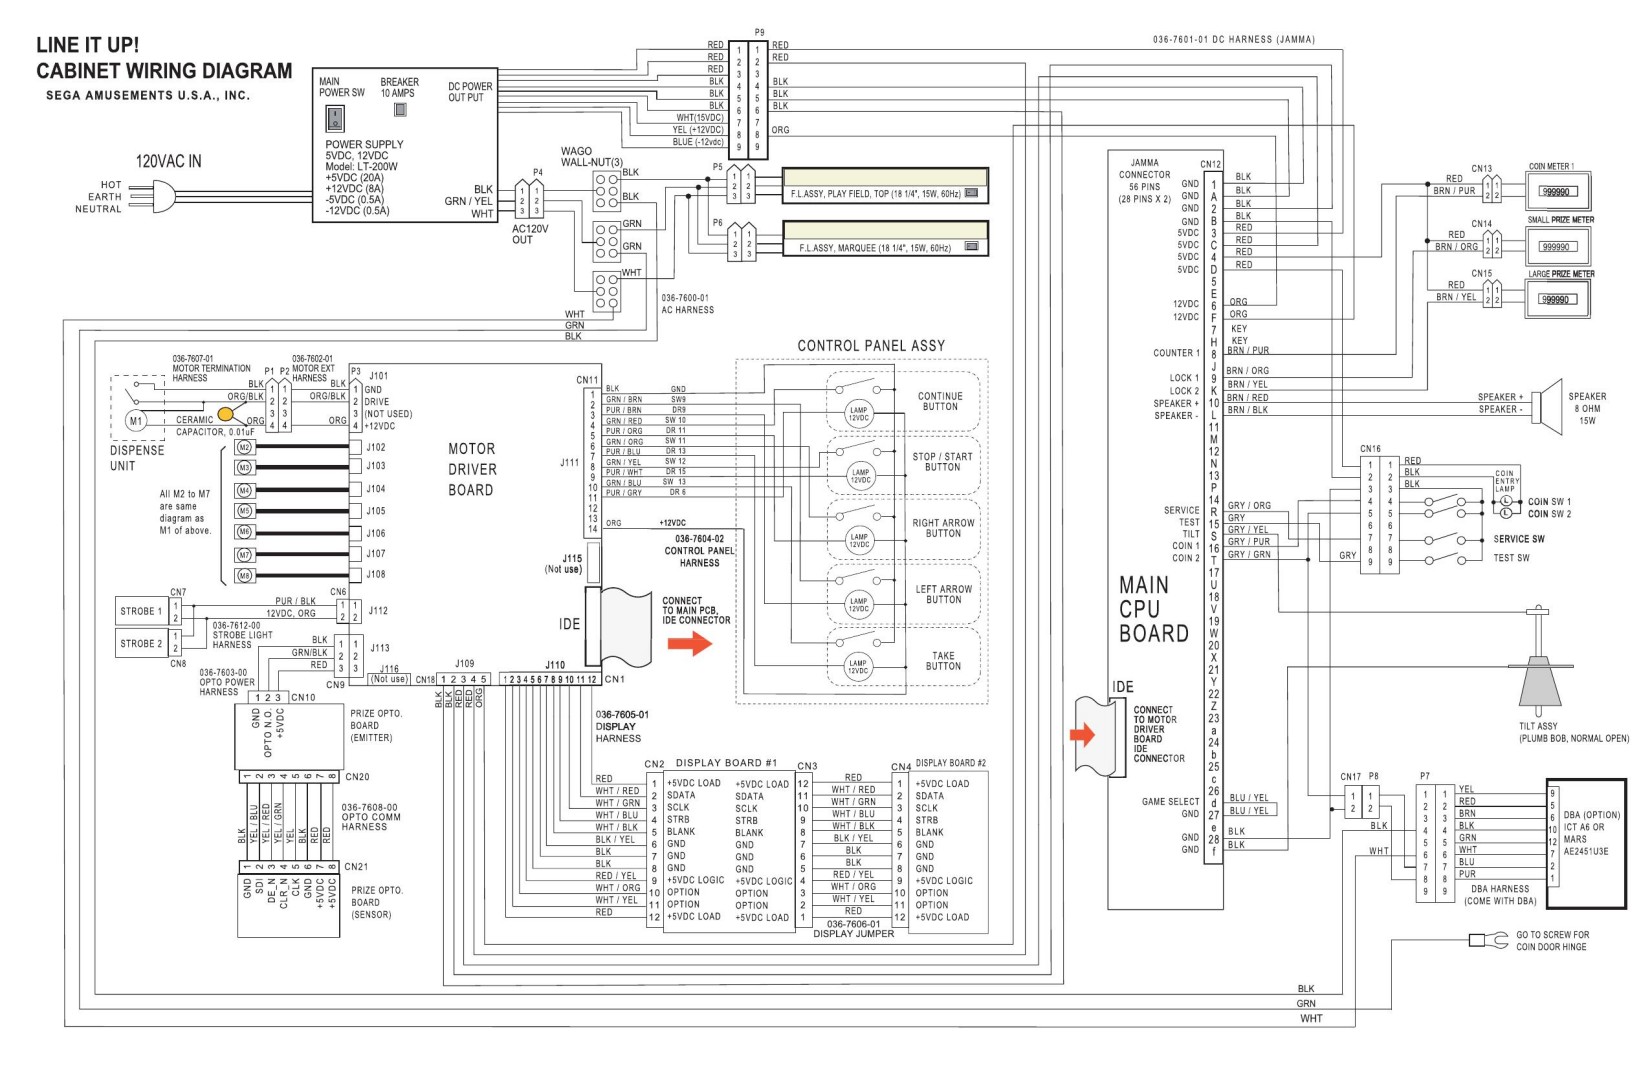 100506 cabinet wiring diagram Line it up.pdf